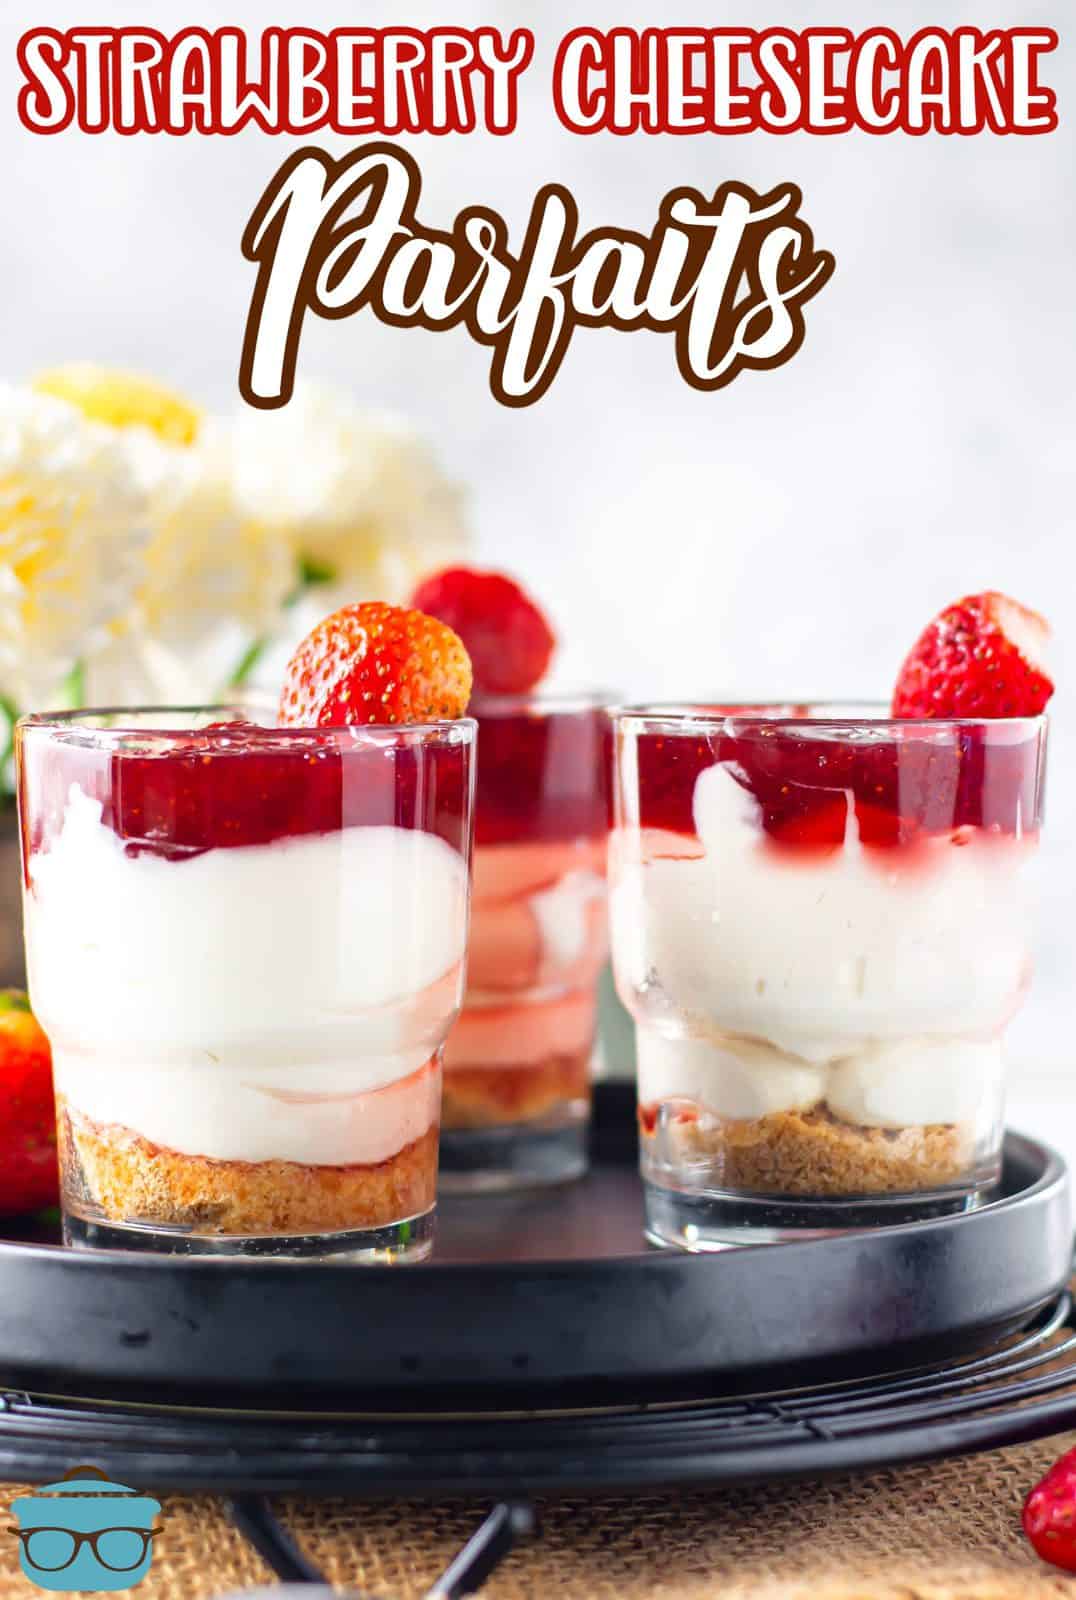 Pinterest image of Strawberry Cheesecake Parfaits showing layers on black tray.